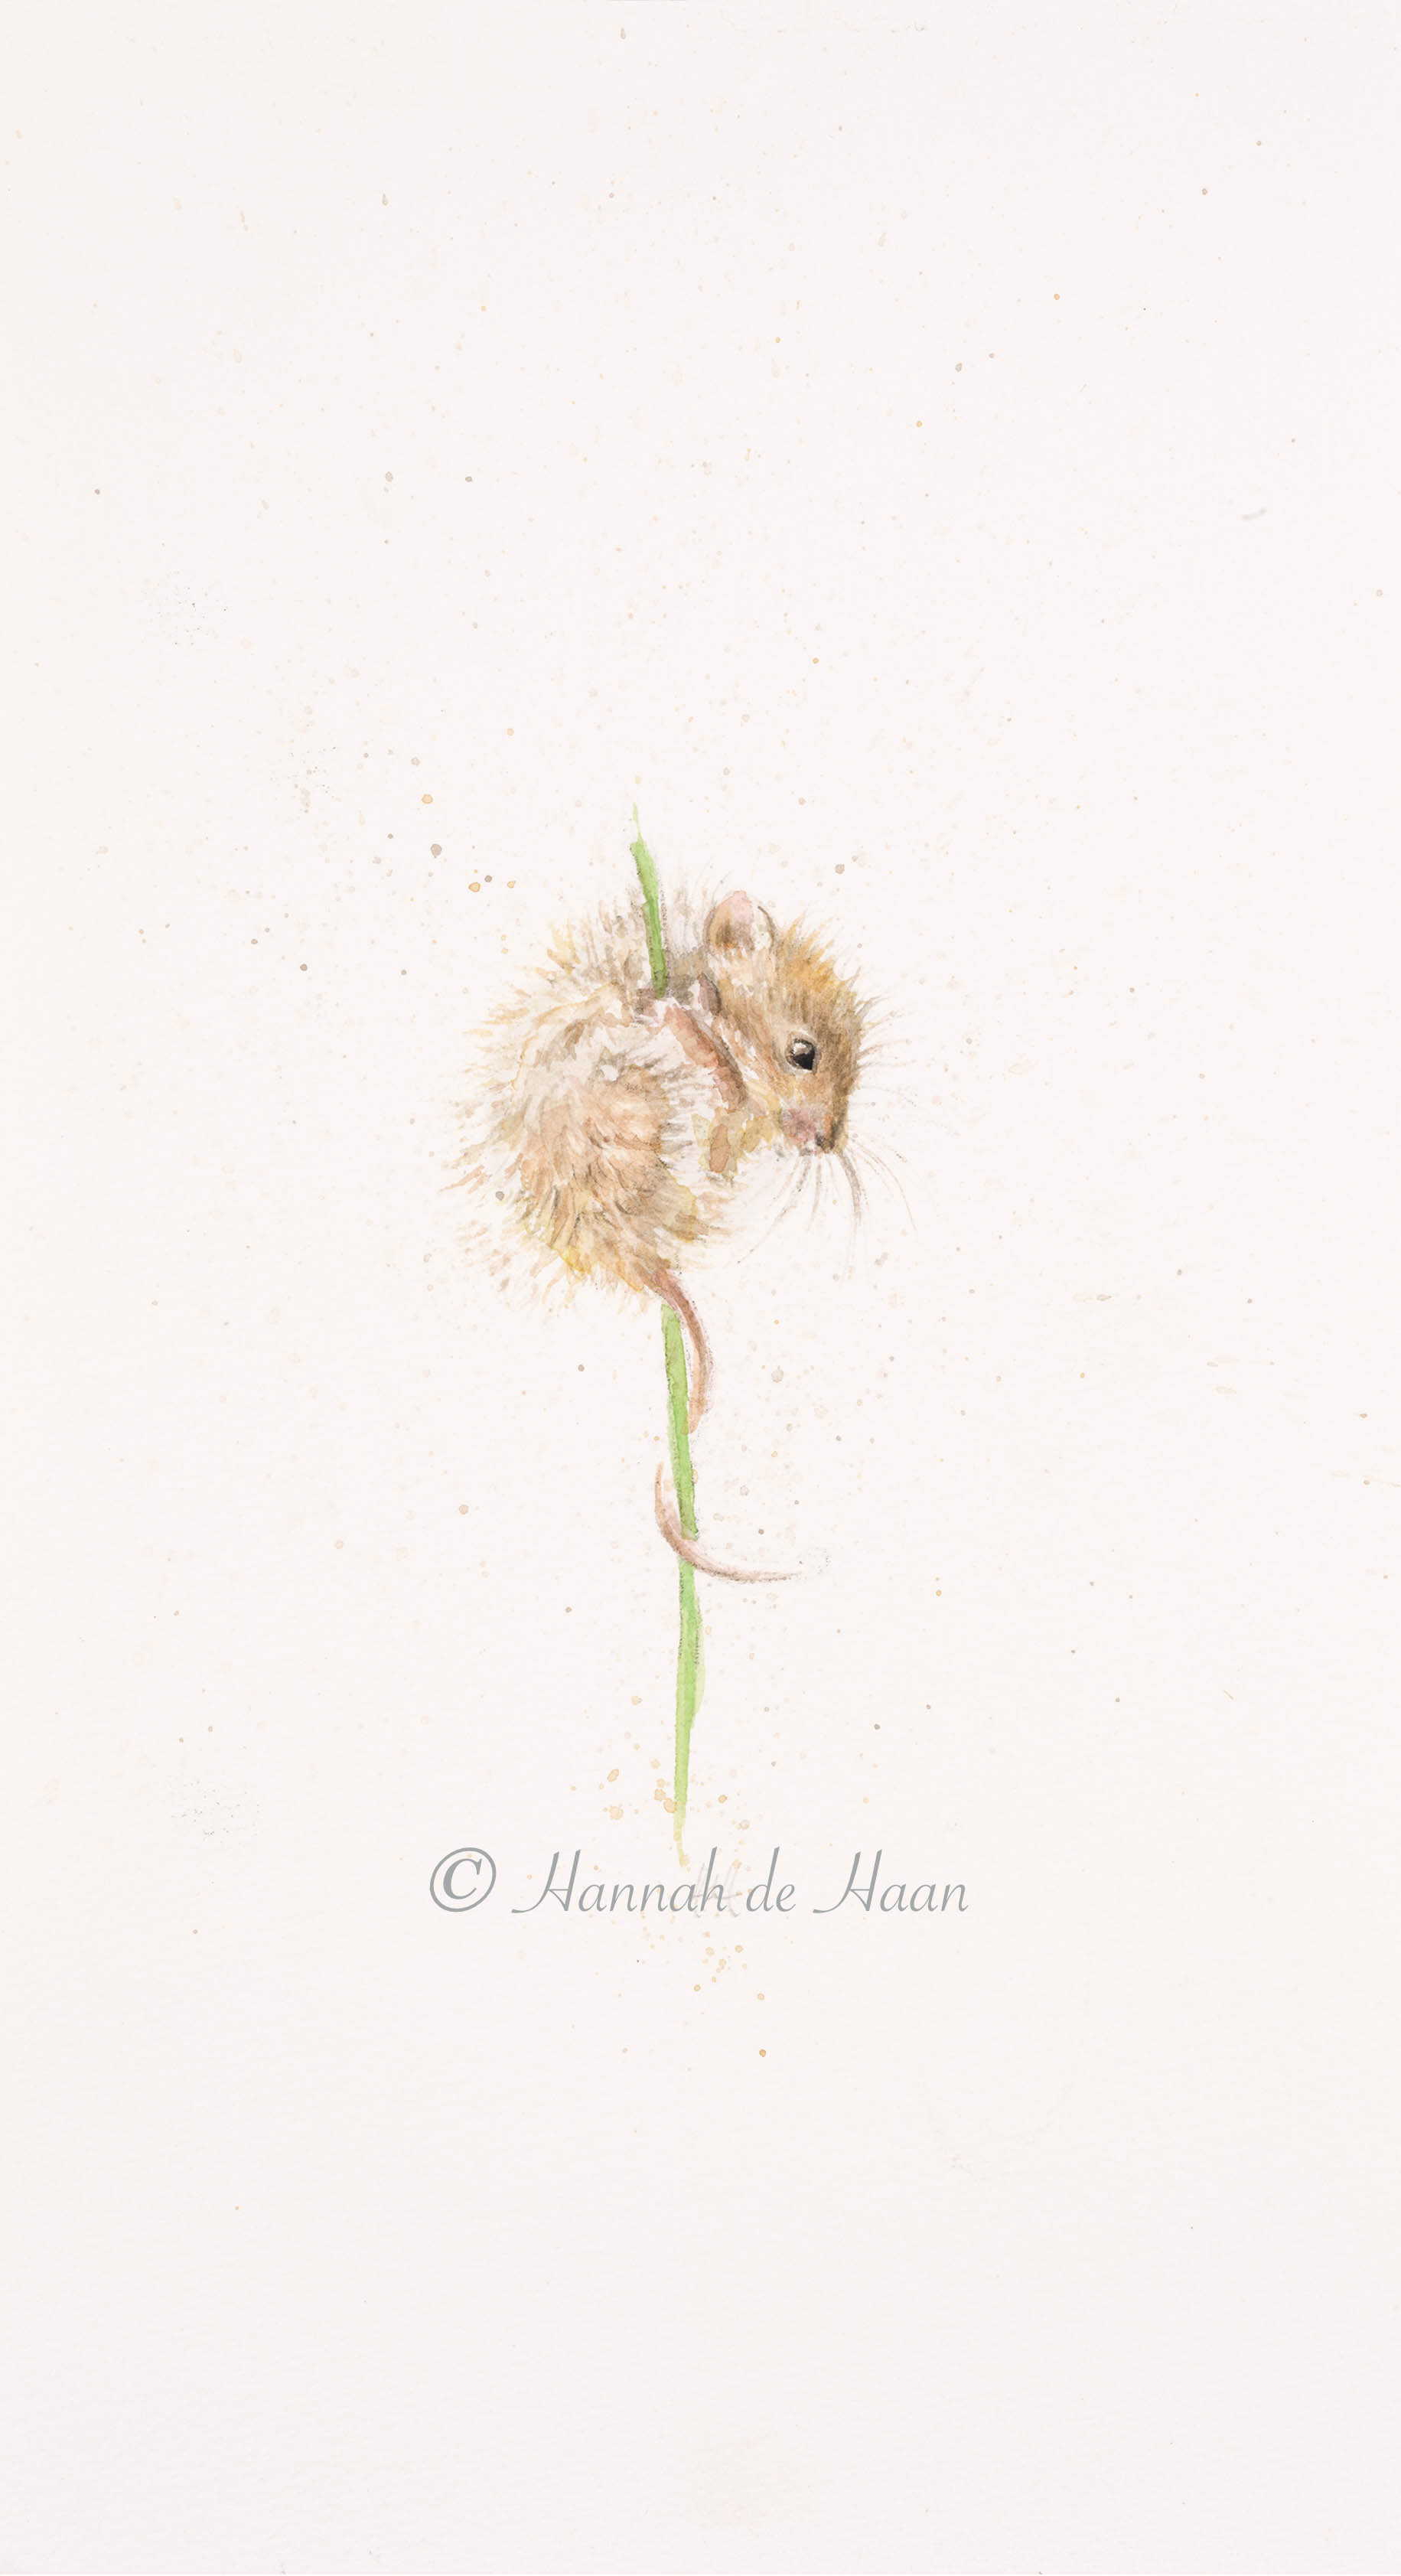 Mouse British Wildlife Illustration Framed 30 x 30cm